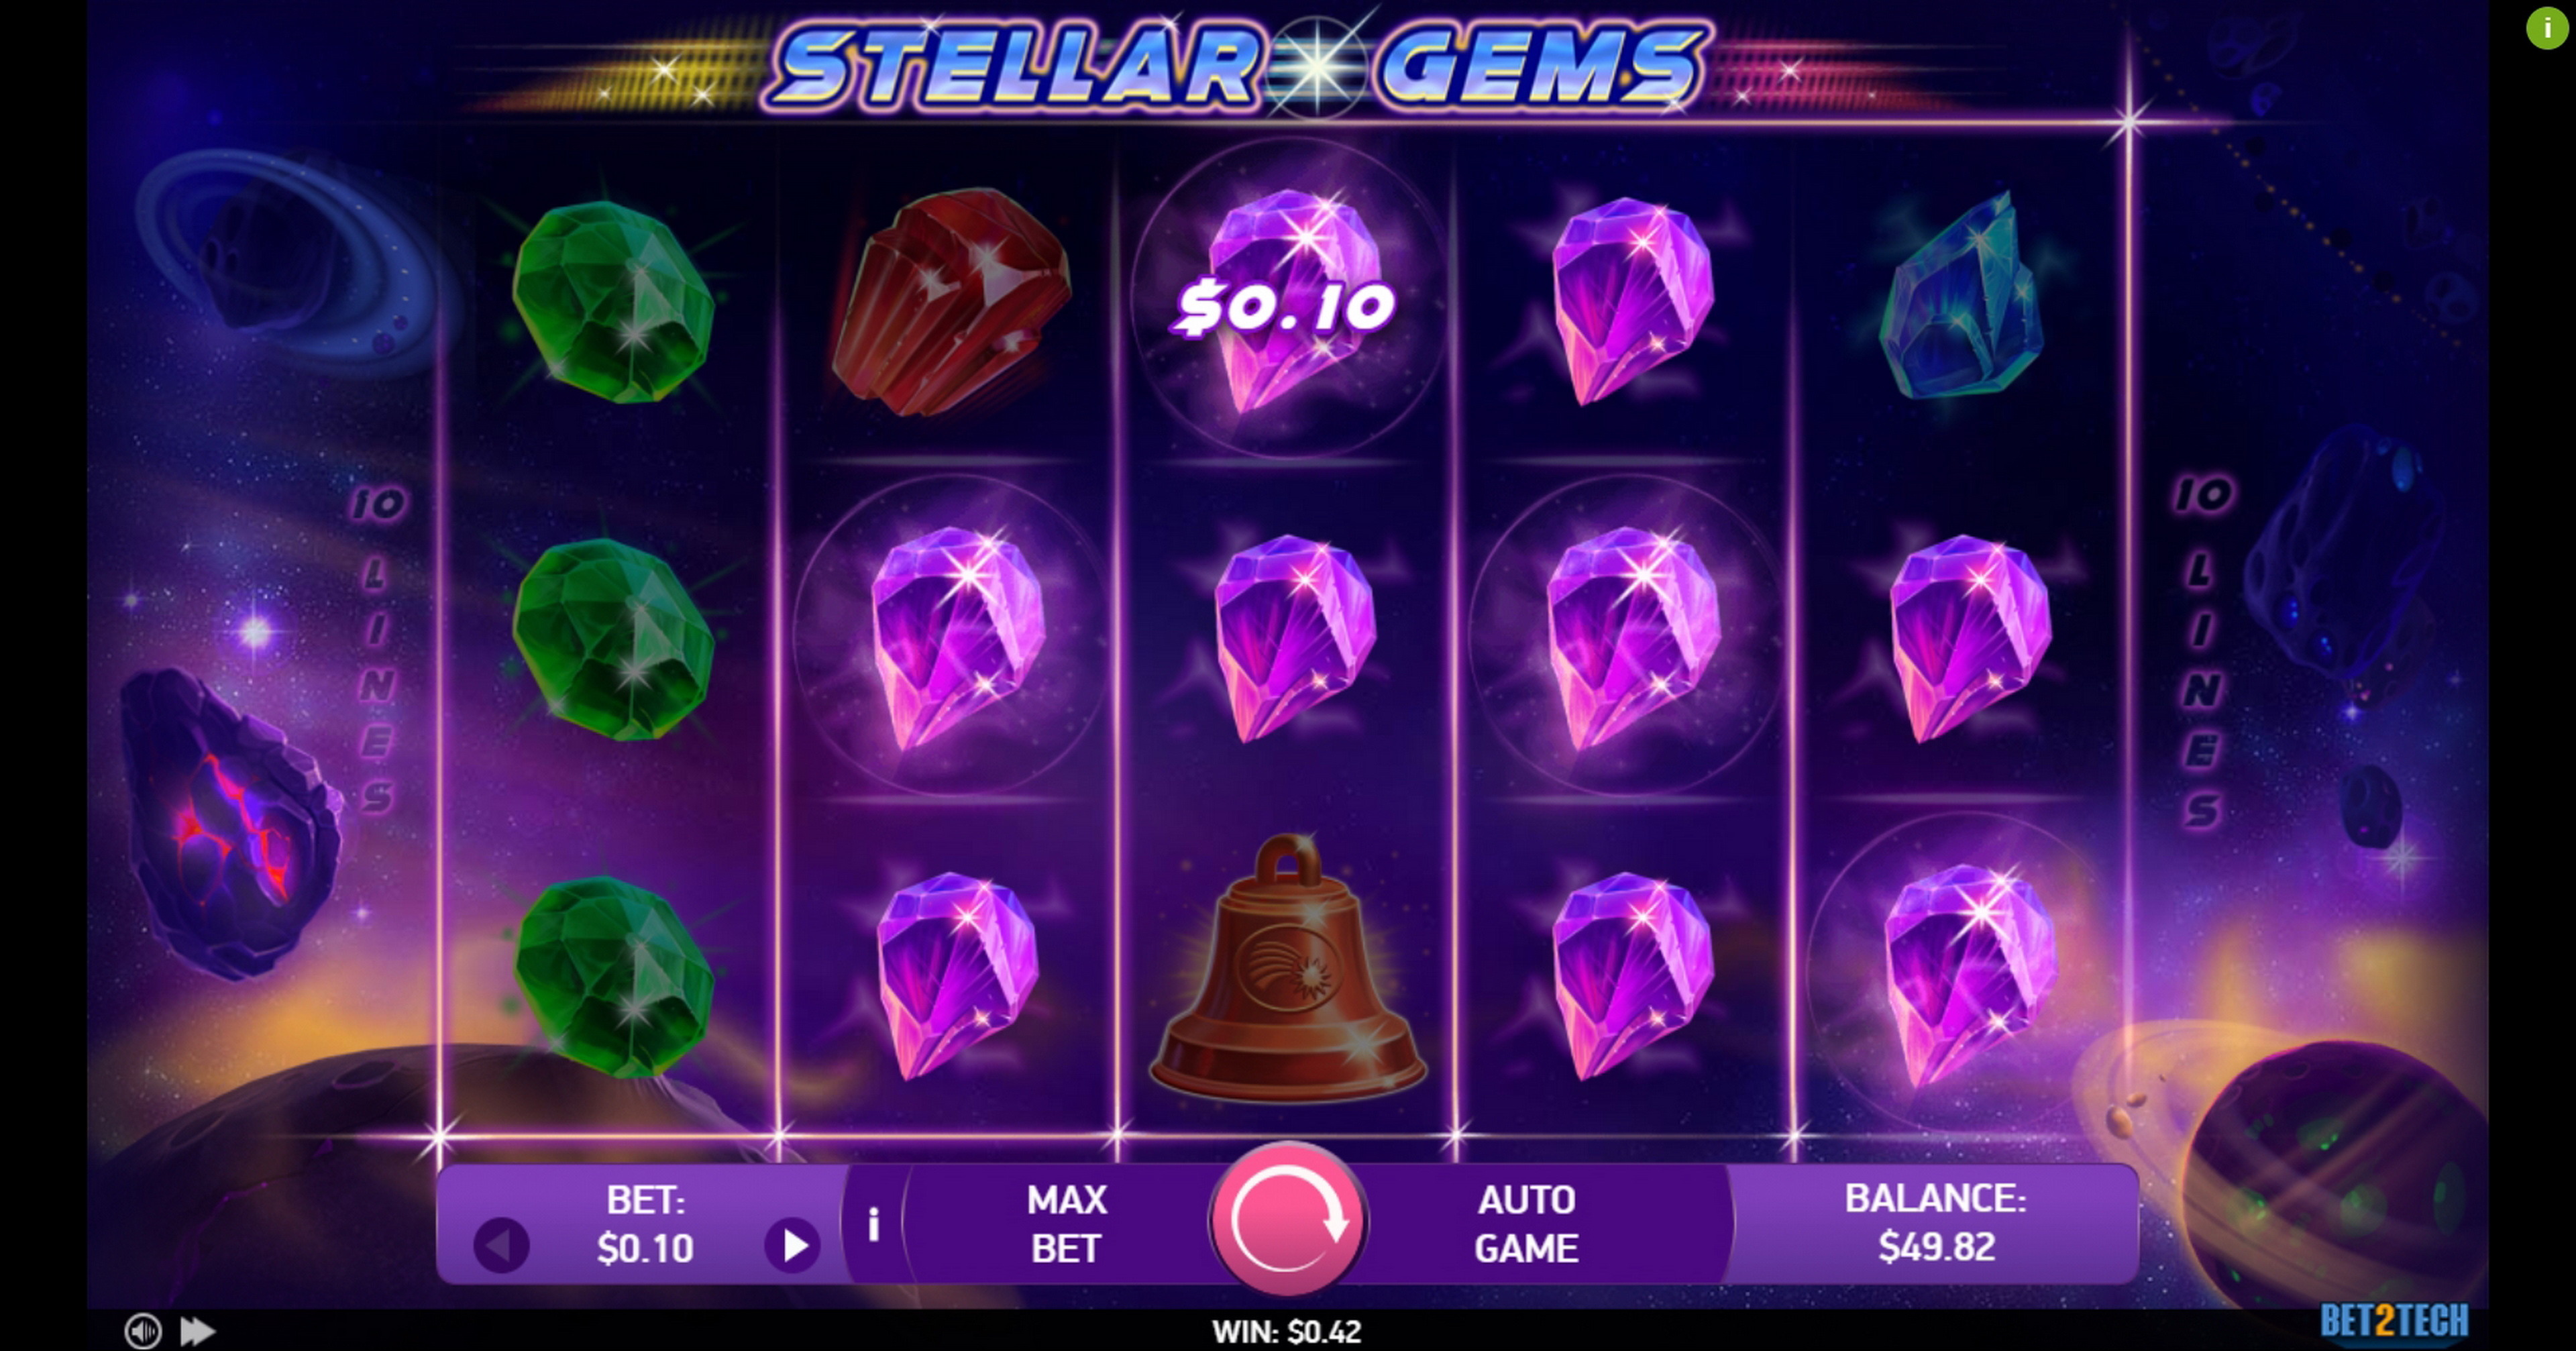 Win Money in Stellar Gems Free Slot Game by Bet2Tech